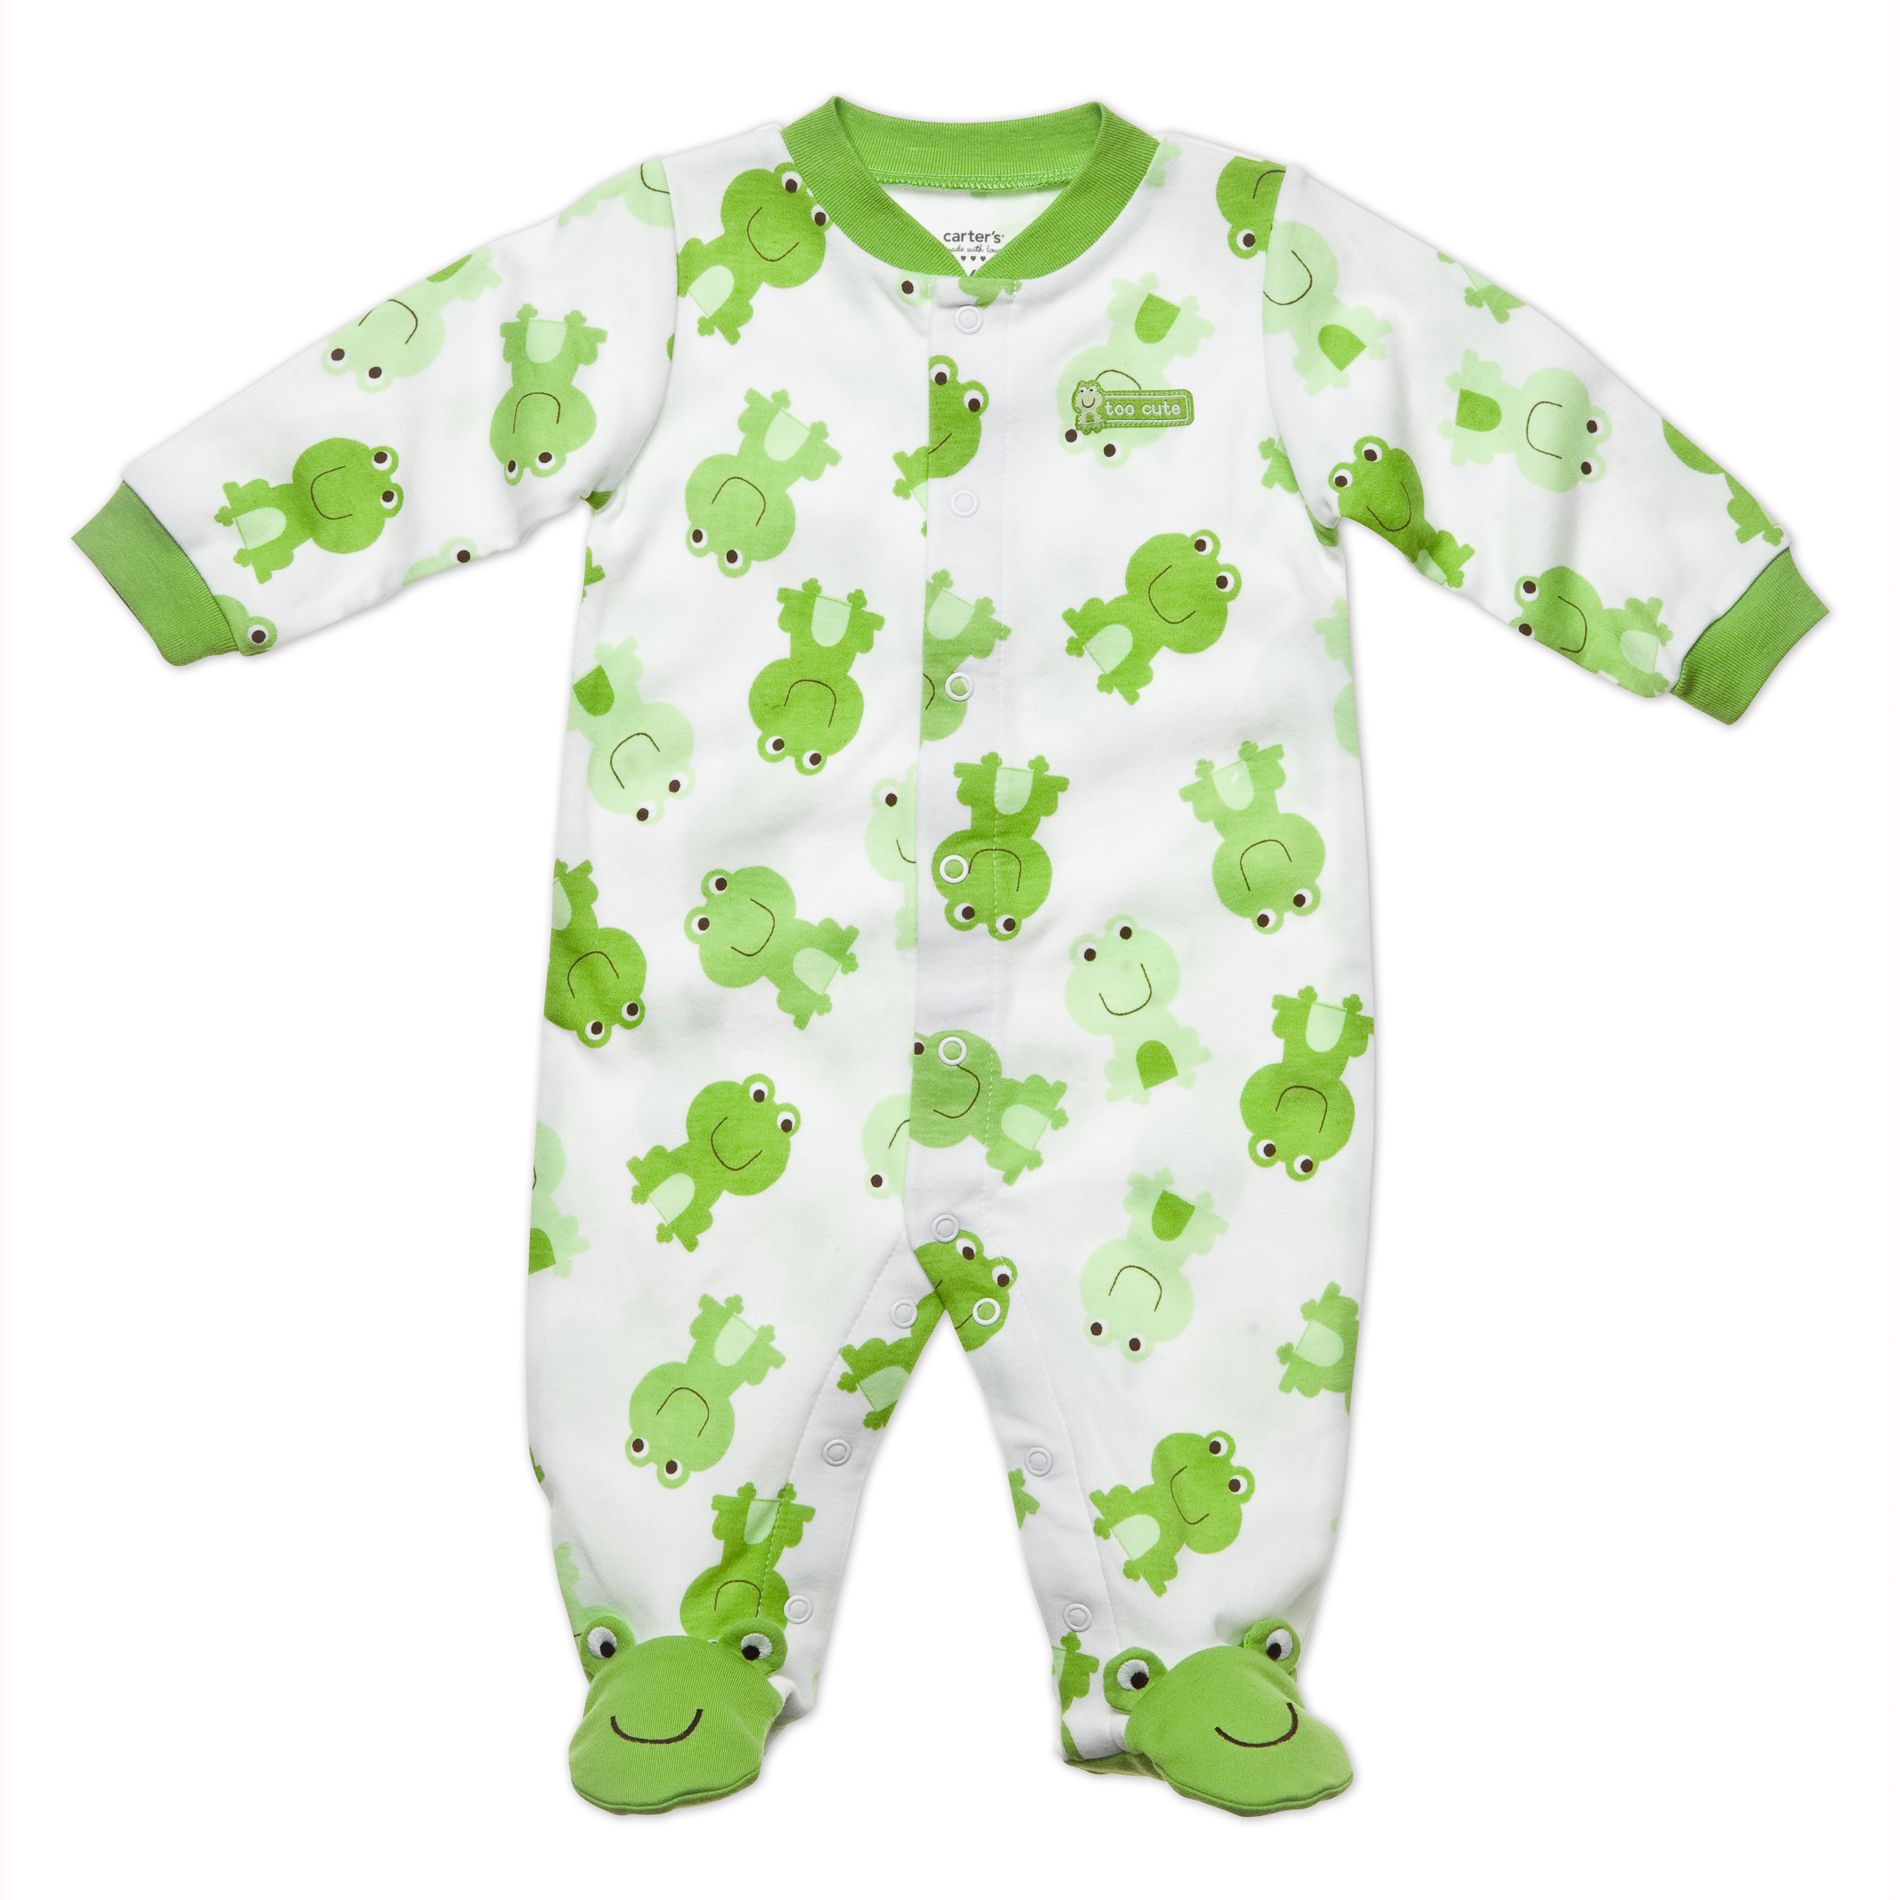 Carter's Newborn Unisex Frog Footed Sleep & Play